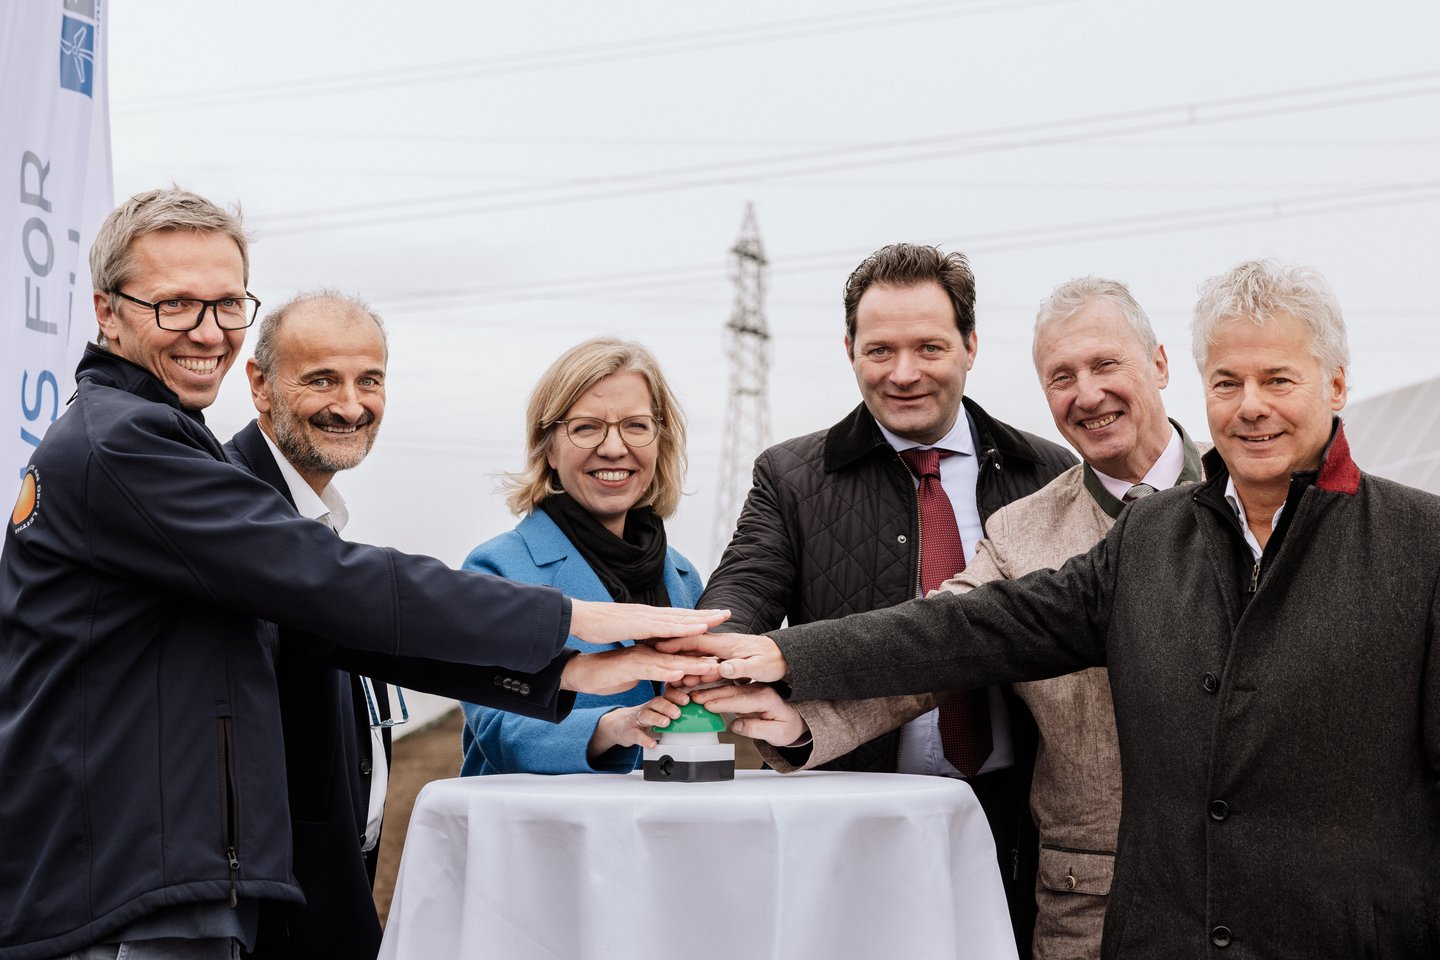 Opening agri-photovoltaics research and demonstration plant EWS Sonnenfeld Bruck/Leitha, Gewessler, Totschnig, Höbarth, Hannesschläger, Payr